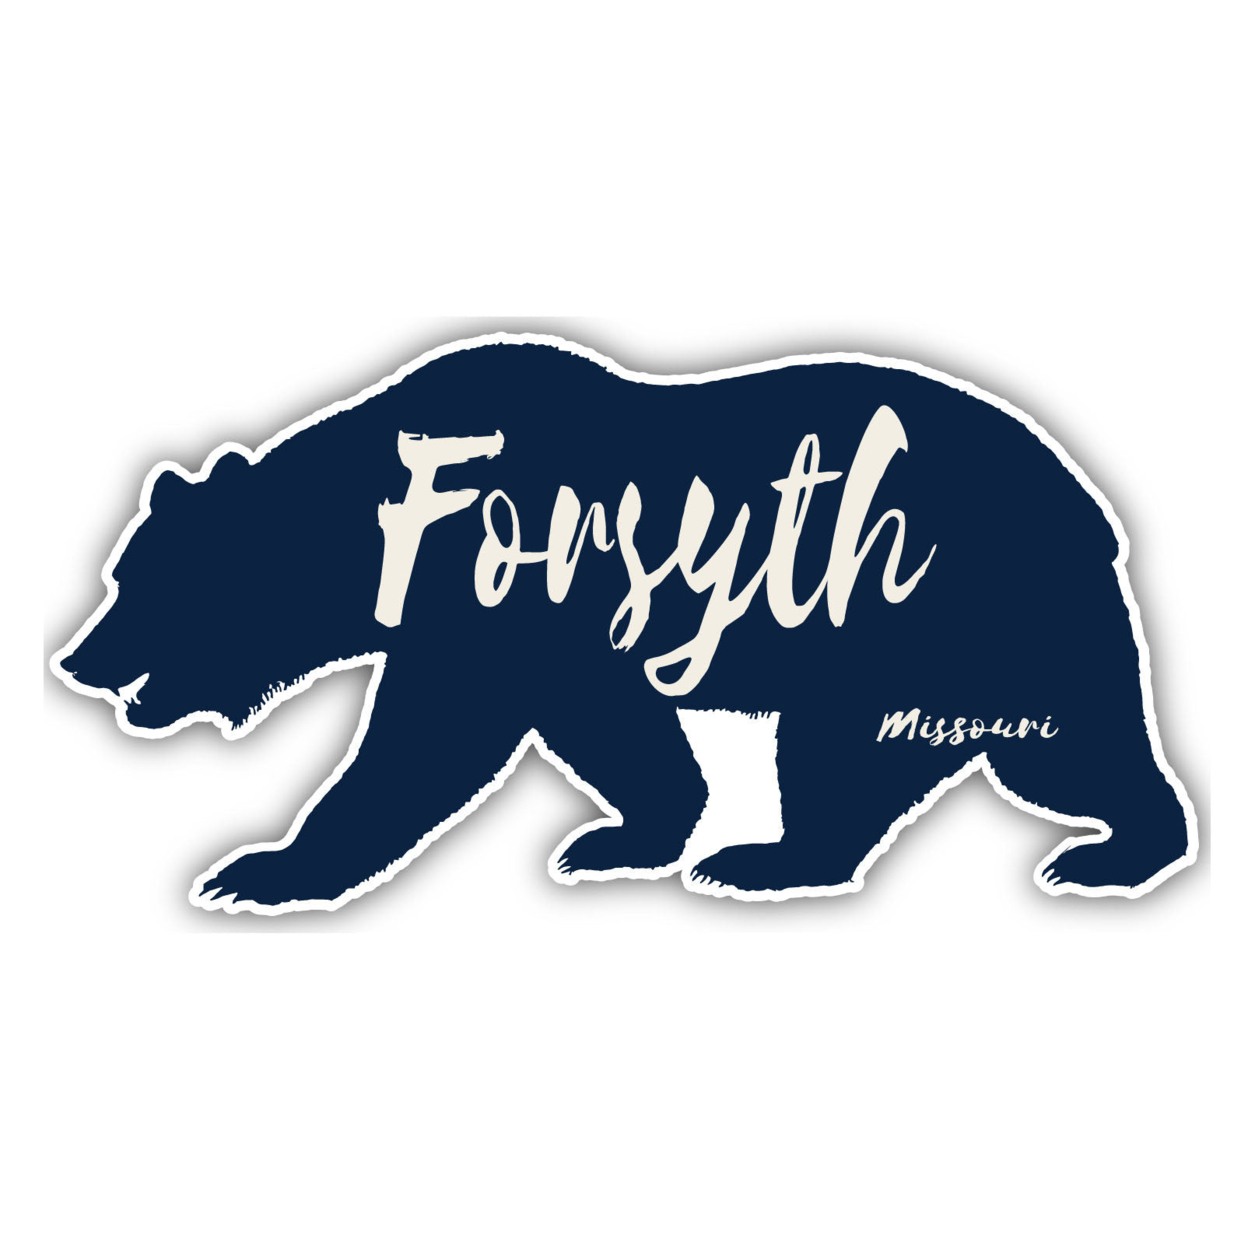 Forsyth Missouri Souvenir Decorative Stickers (Choose Theme And Size) - Single Unit, 4-Inch, Bear